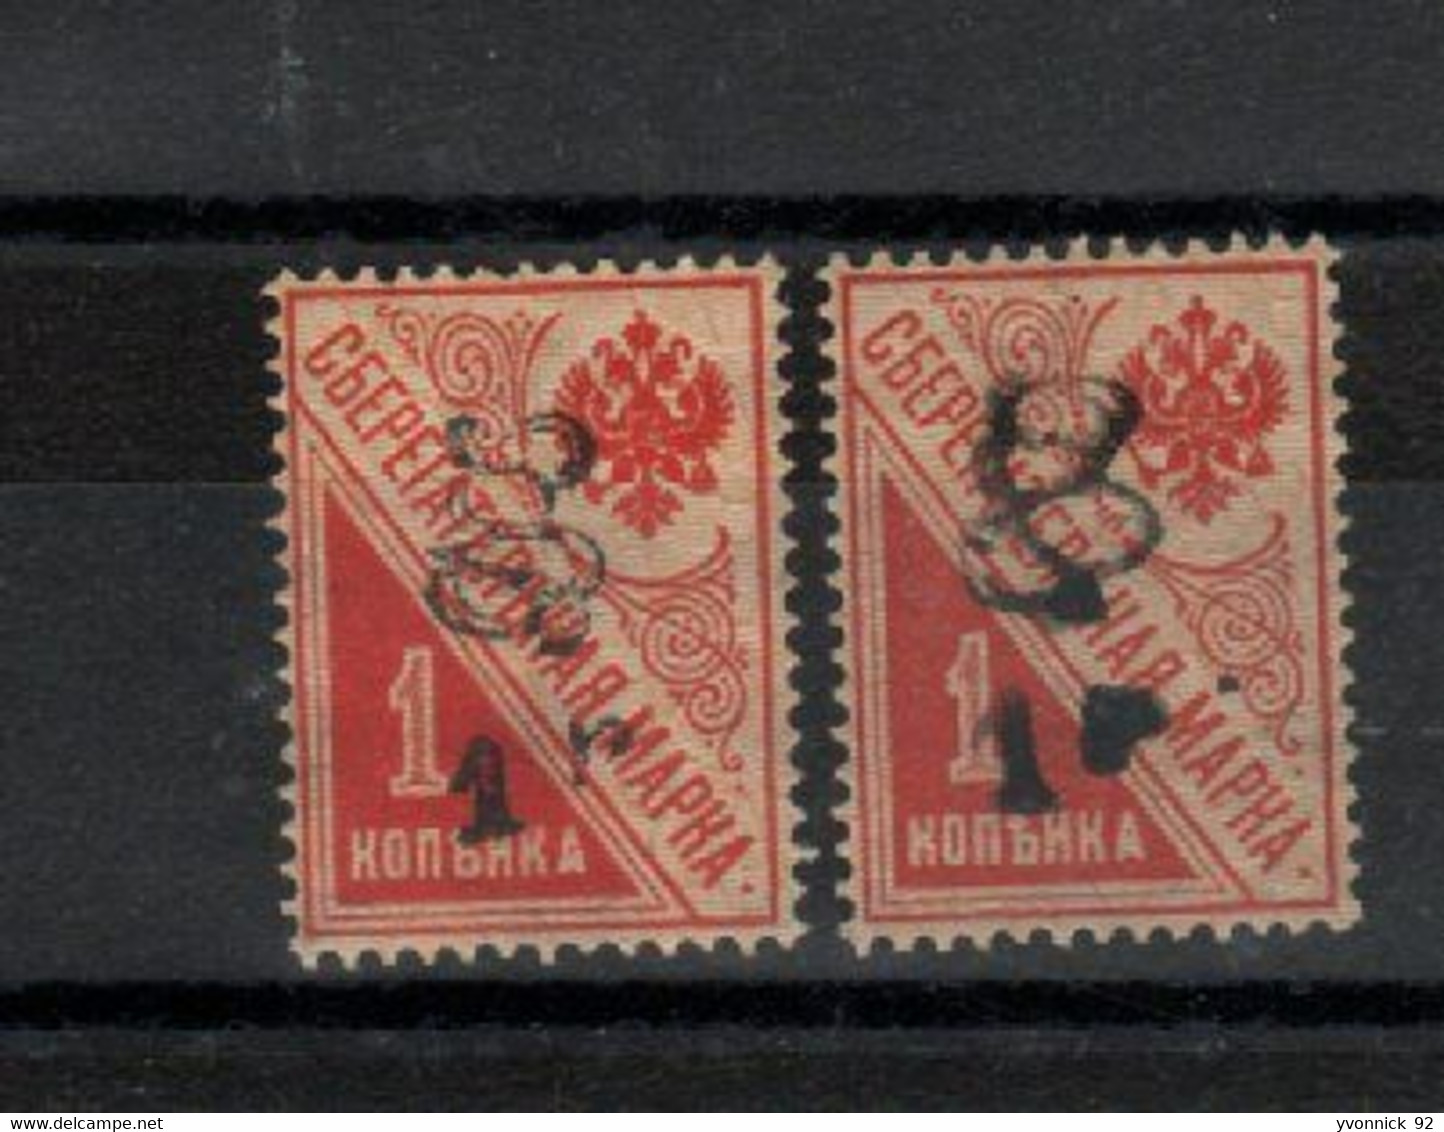 Arménie _2 Timbres De Russie Caisse épargne ( 1920 ) N°77 - Armenia